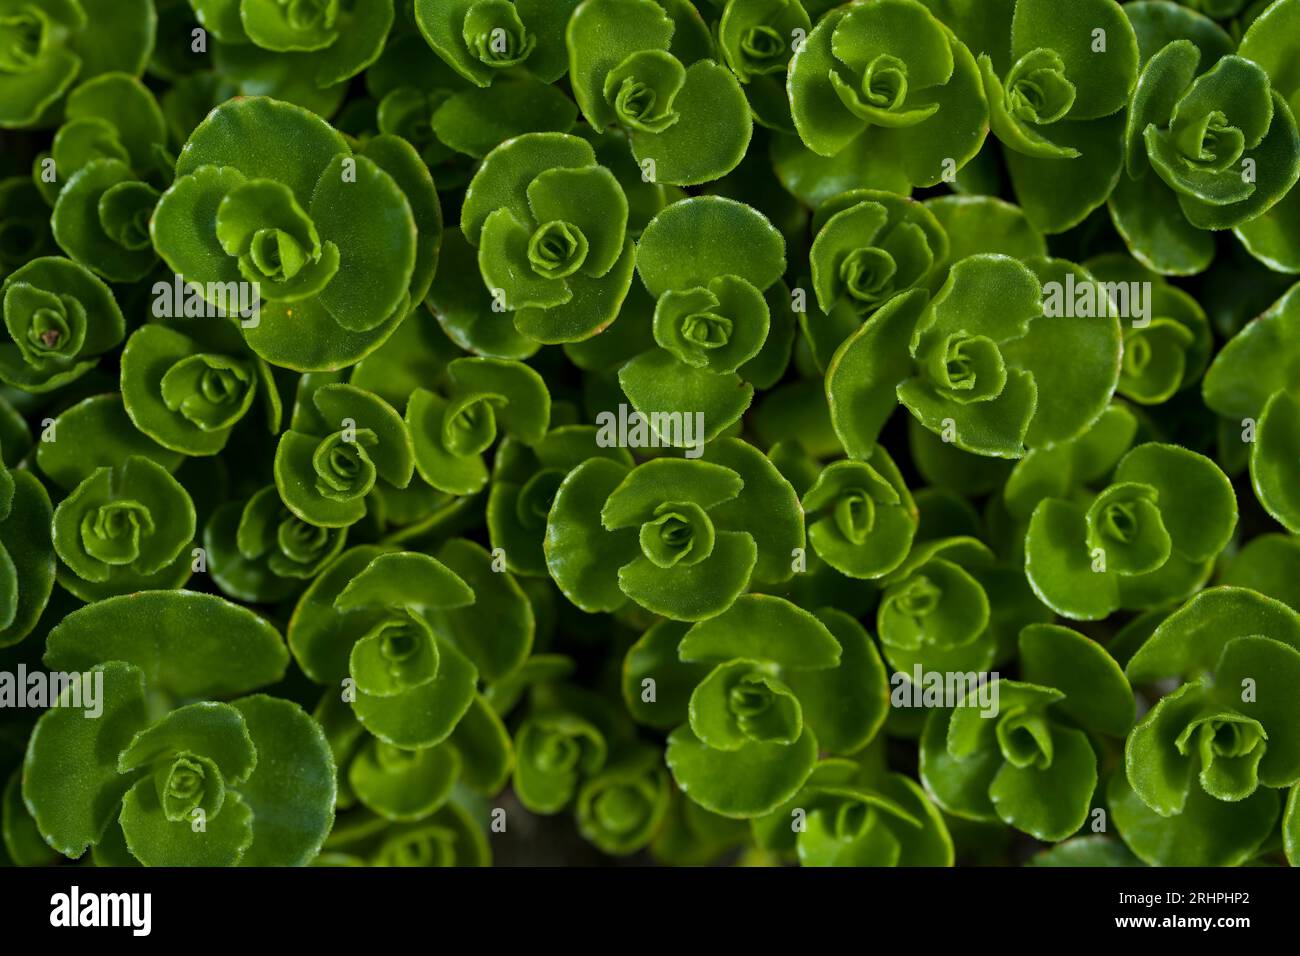 green rosette-like leaves of carpet fatleaf (Sedum spurium), top view, Germany Stock Photo